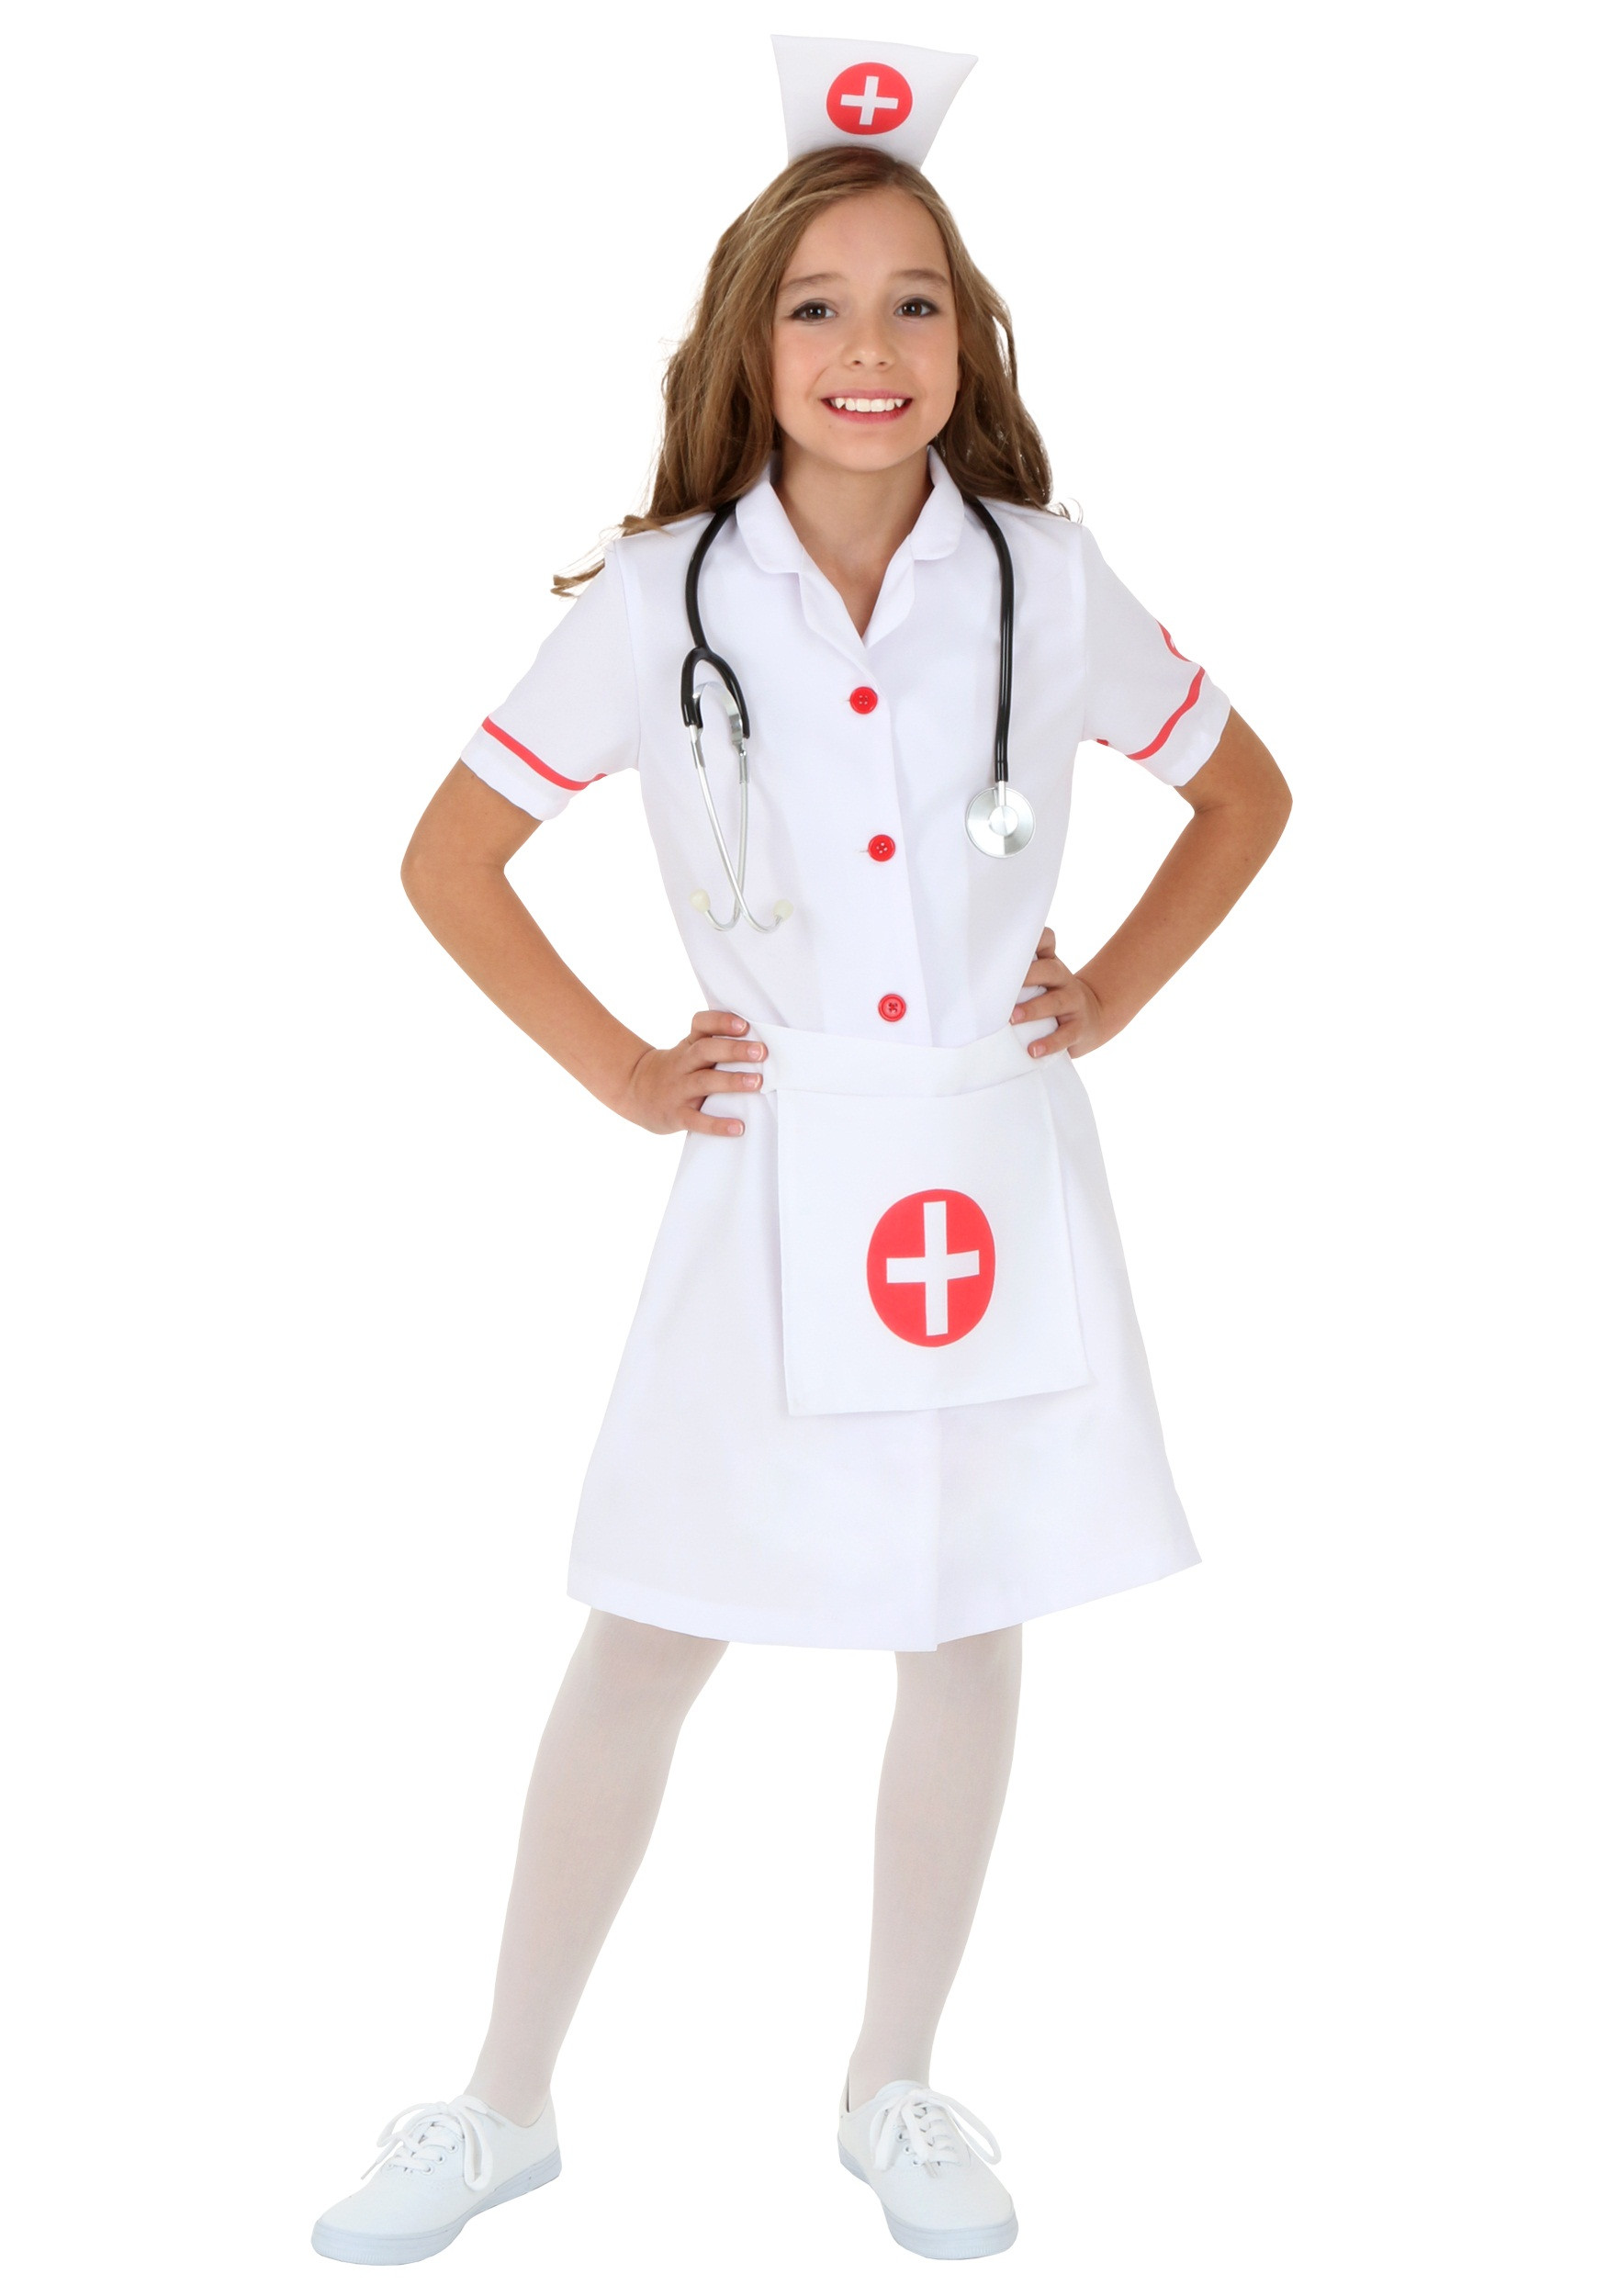 Best ideas about DIY Nurse Costume
. Save or Pin Child Nurse Costume Now.